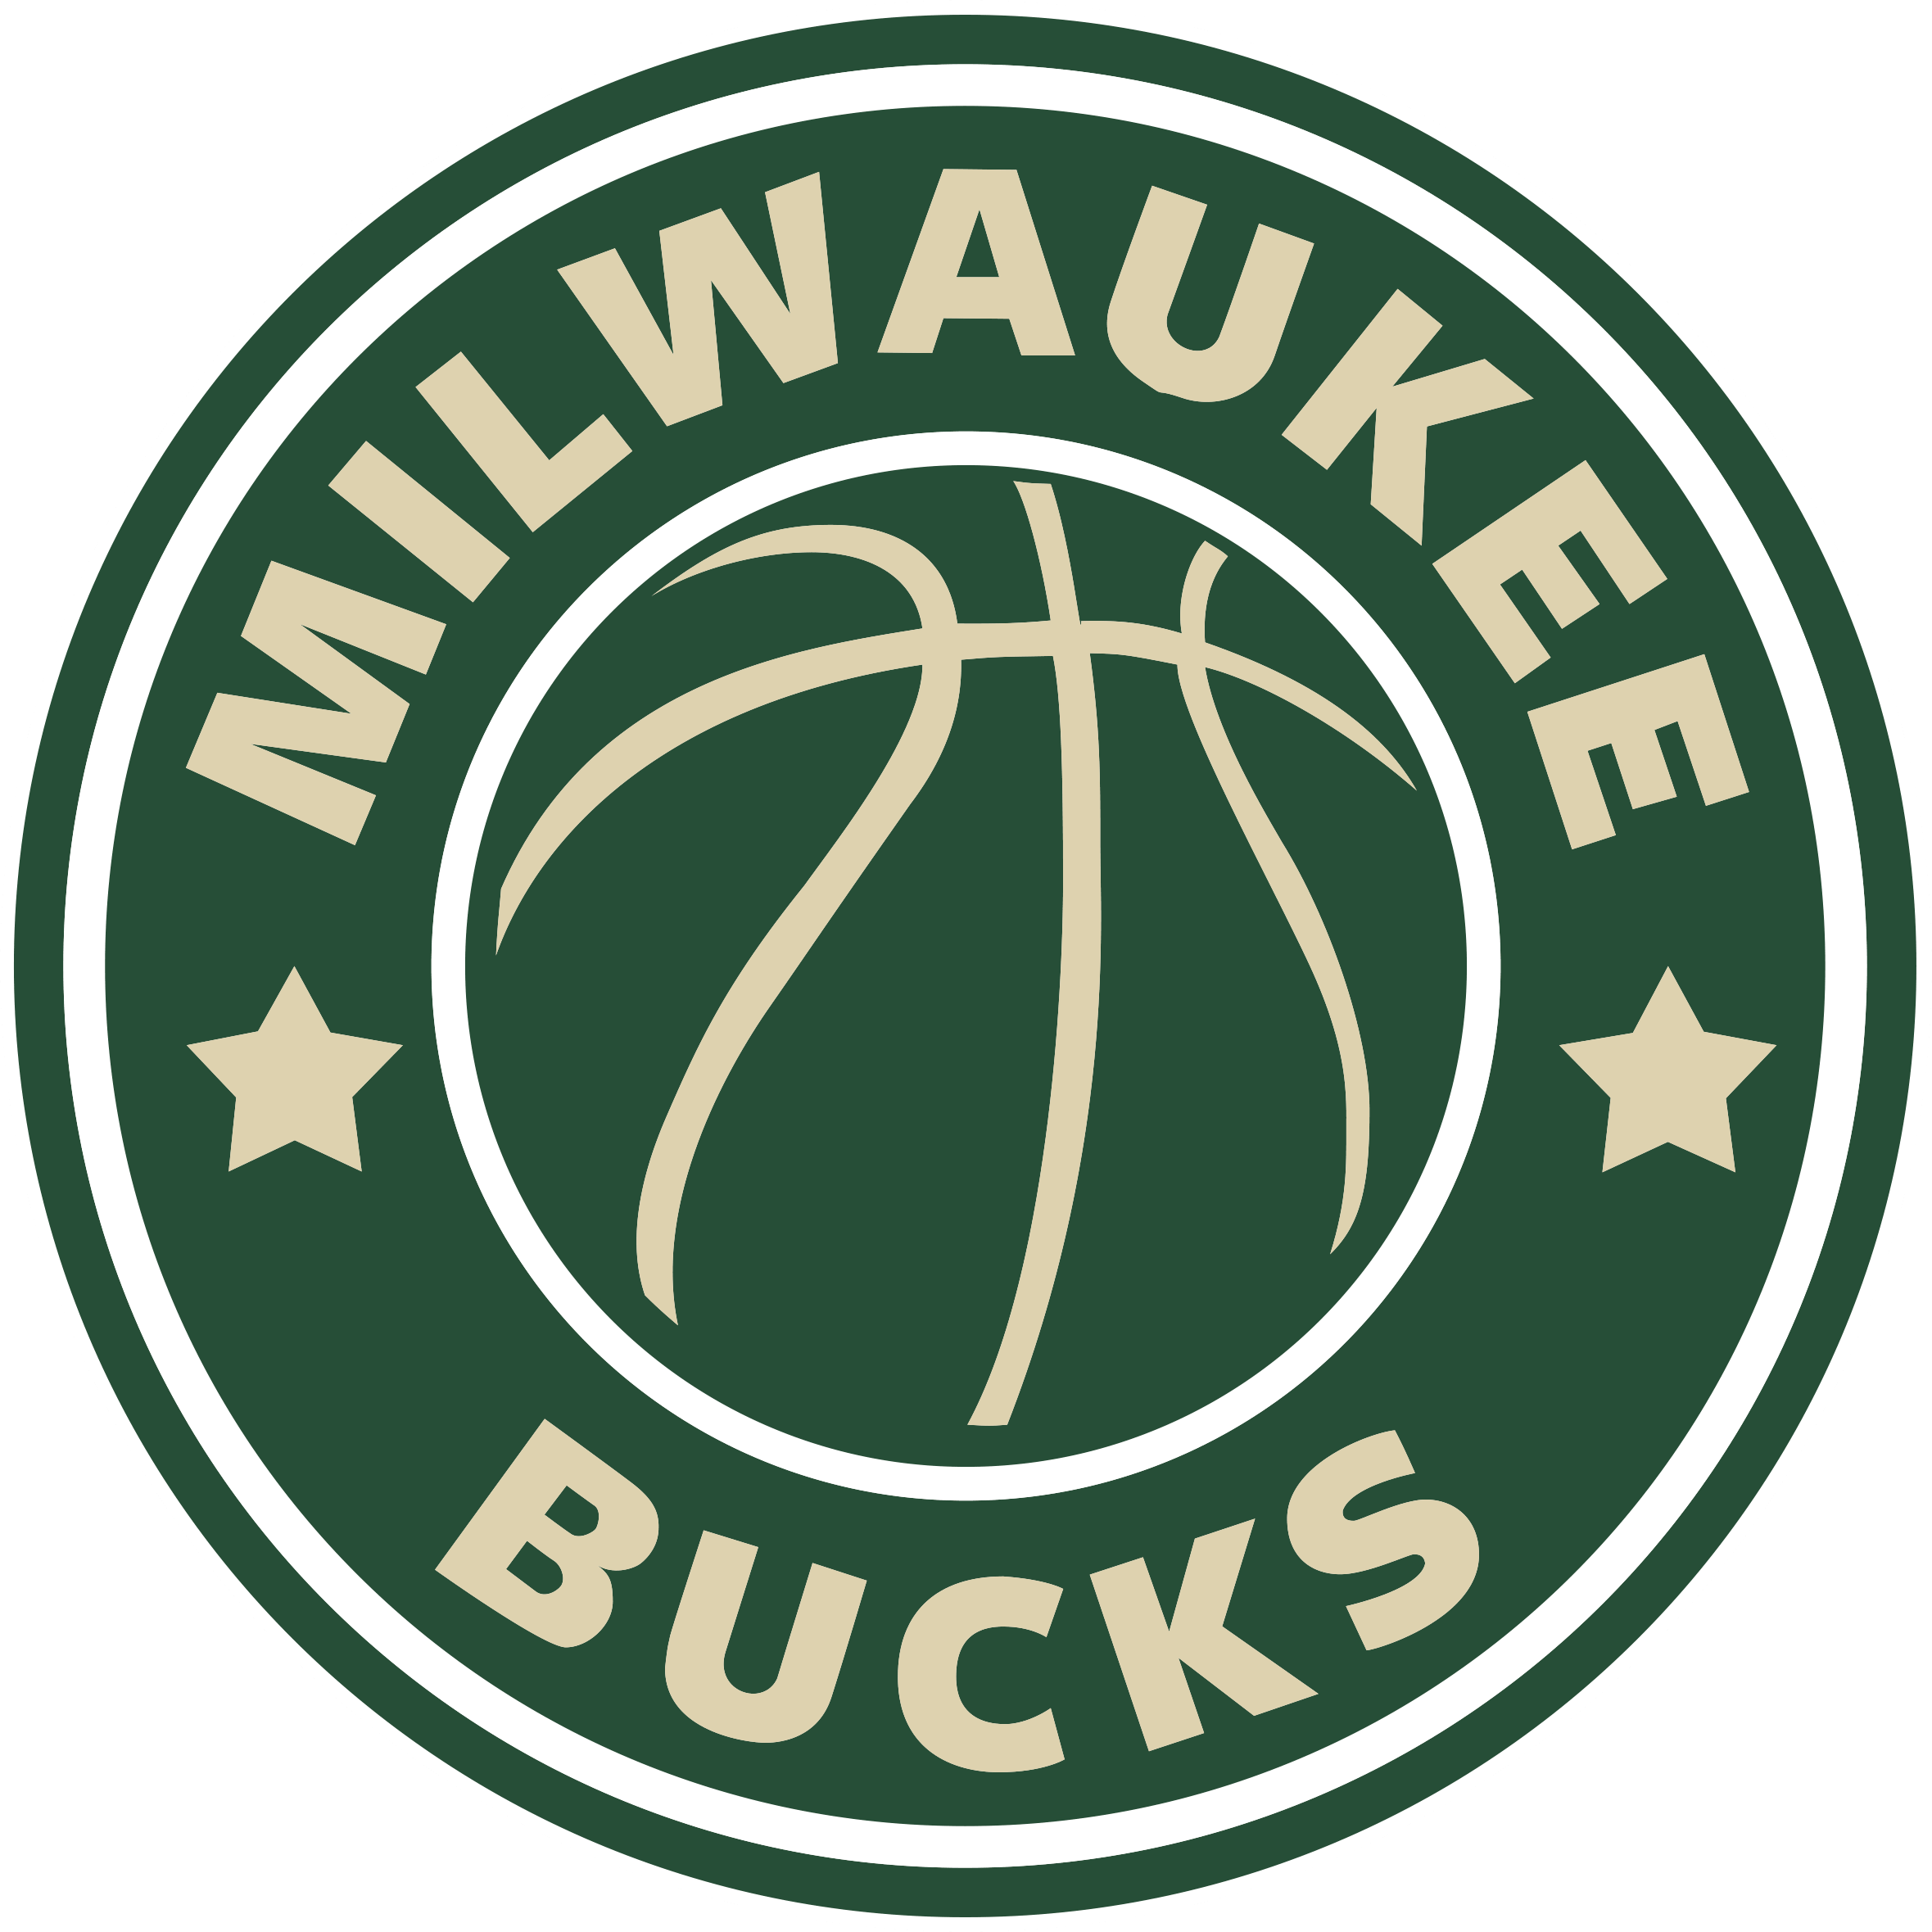 Milwaukee Bucks wallpaper